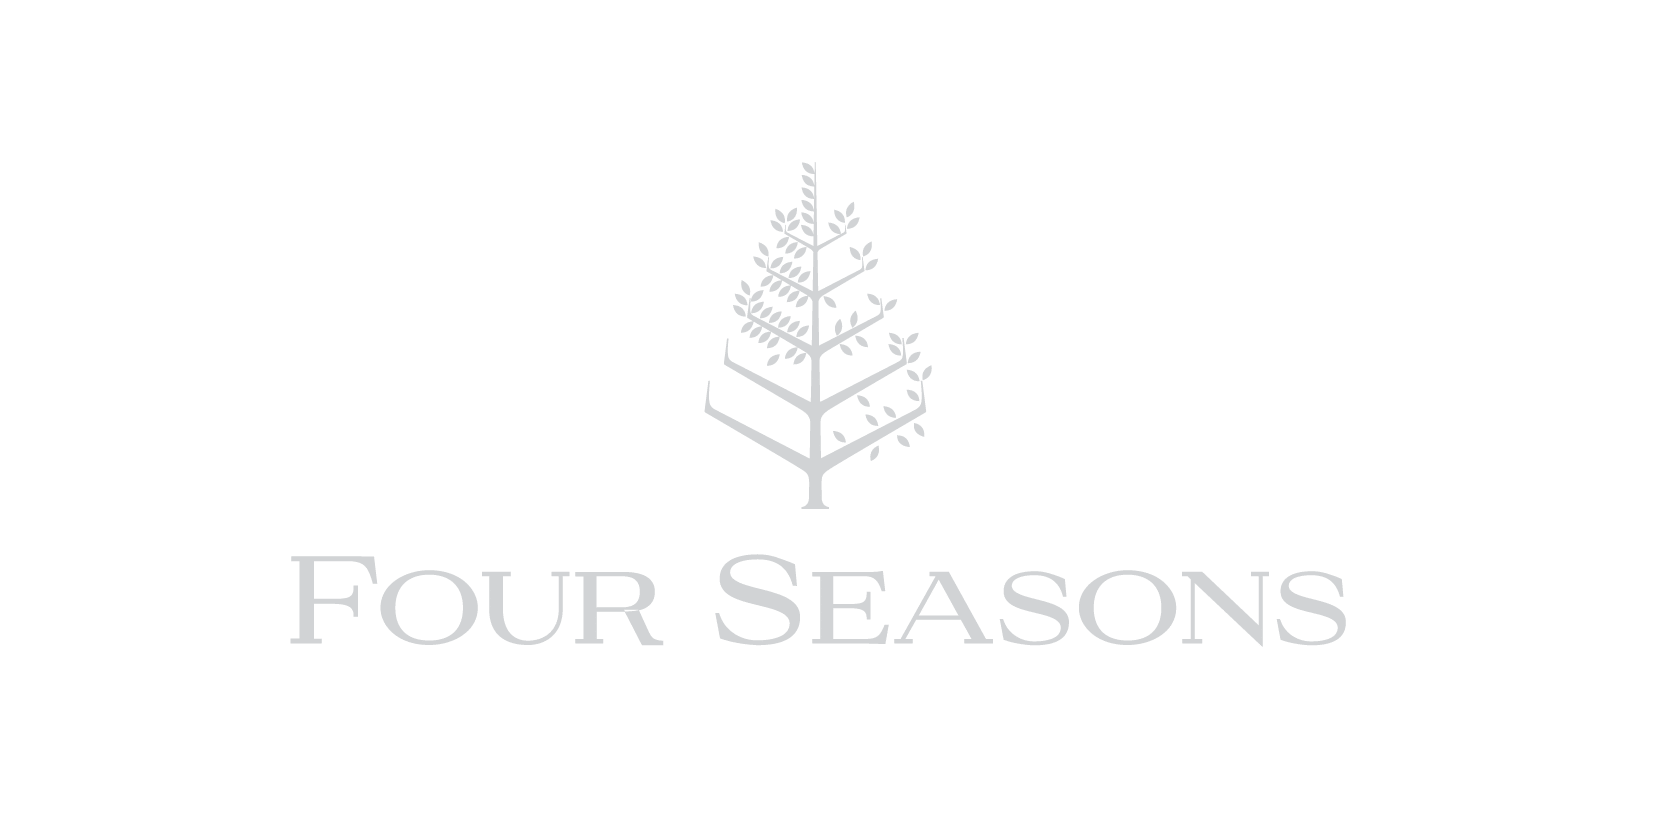 The Four Seasons Resort logo